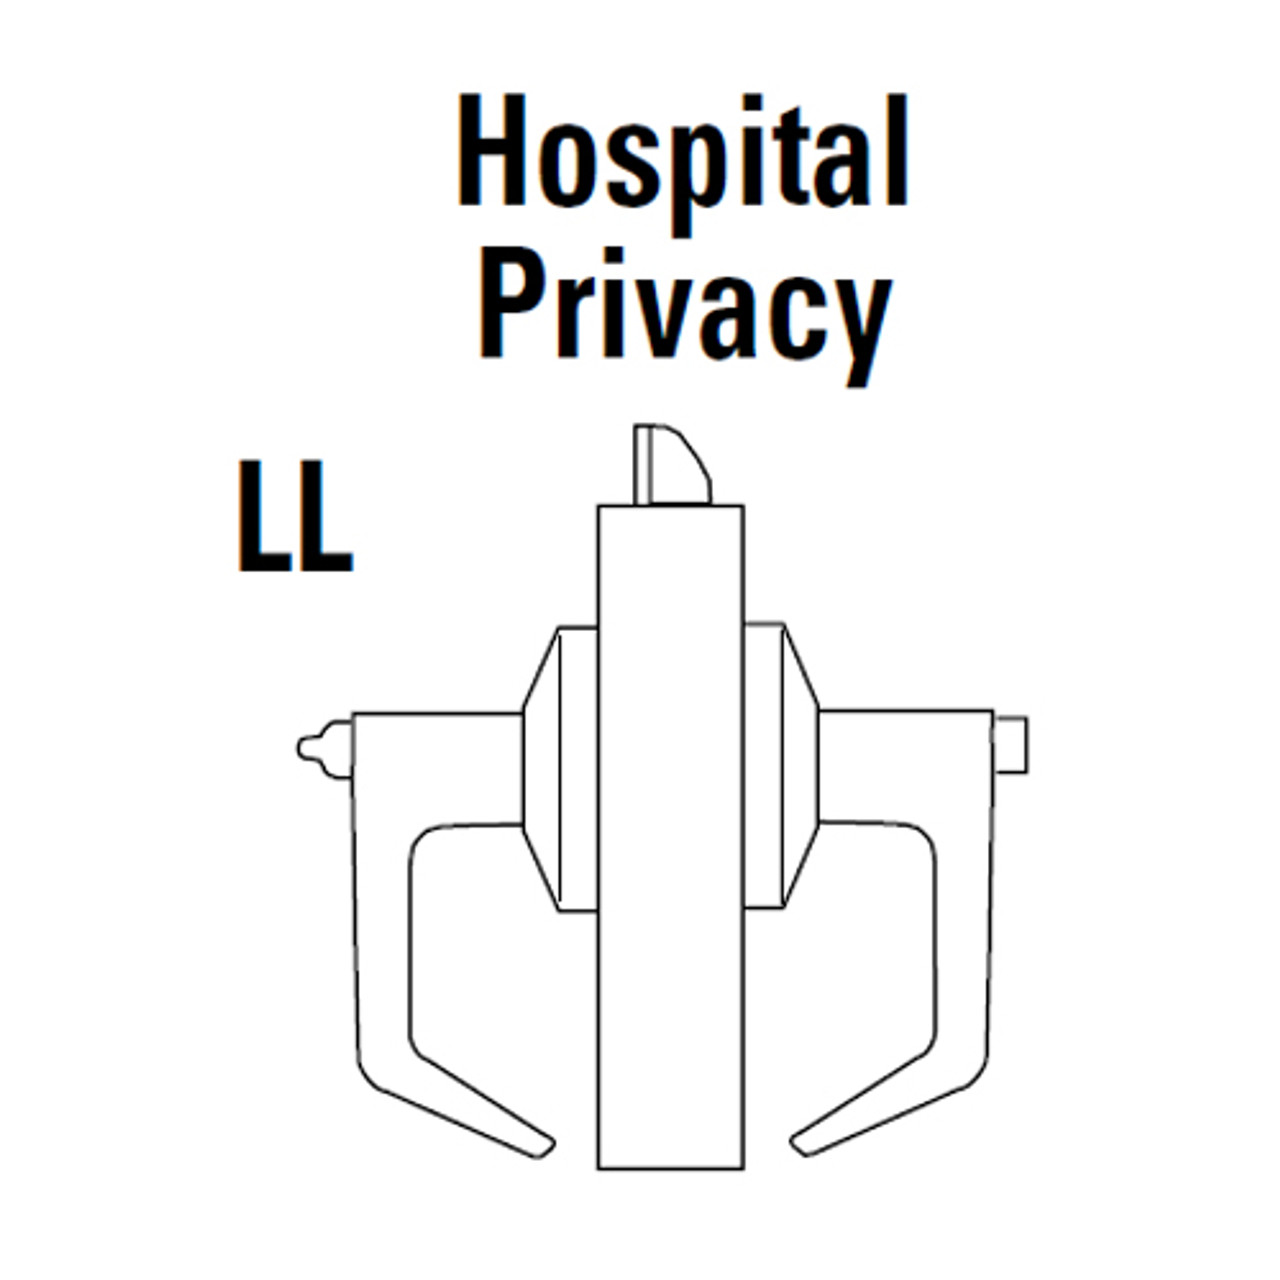 9K30LL14DSTK622 Best 9K Series Hospital Privacy Heavy Duty Cylindrical Lever Locks in Black